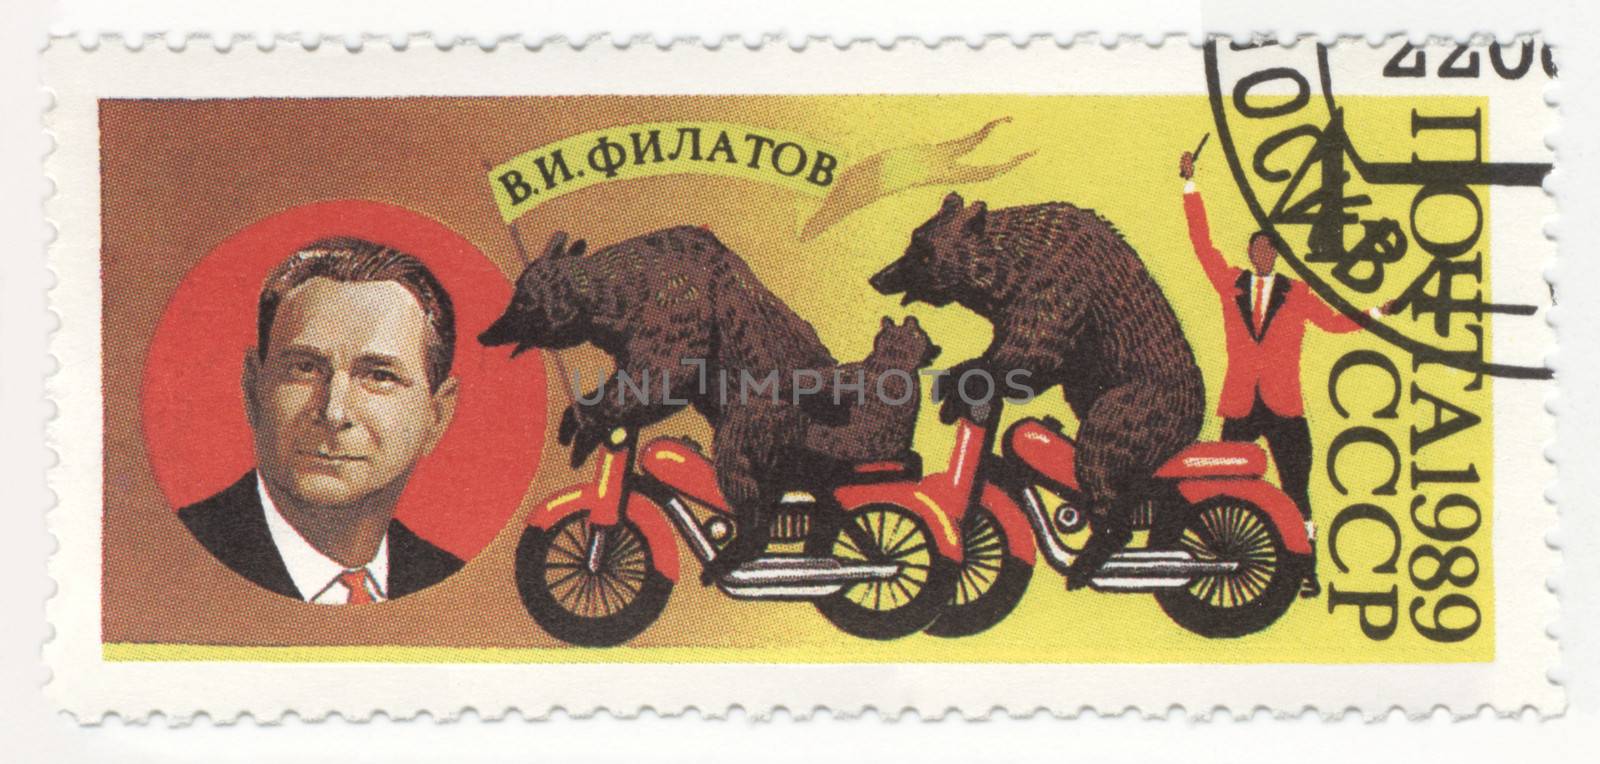 Soviet bear trainer Valentin Filatov on post stamp by wander